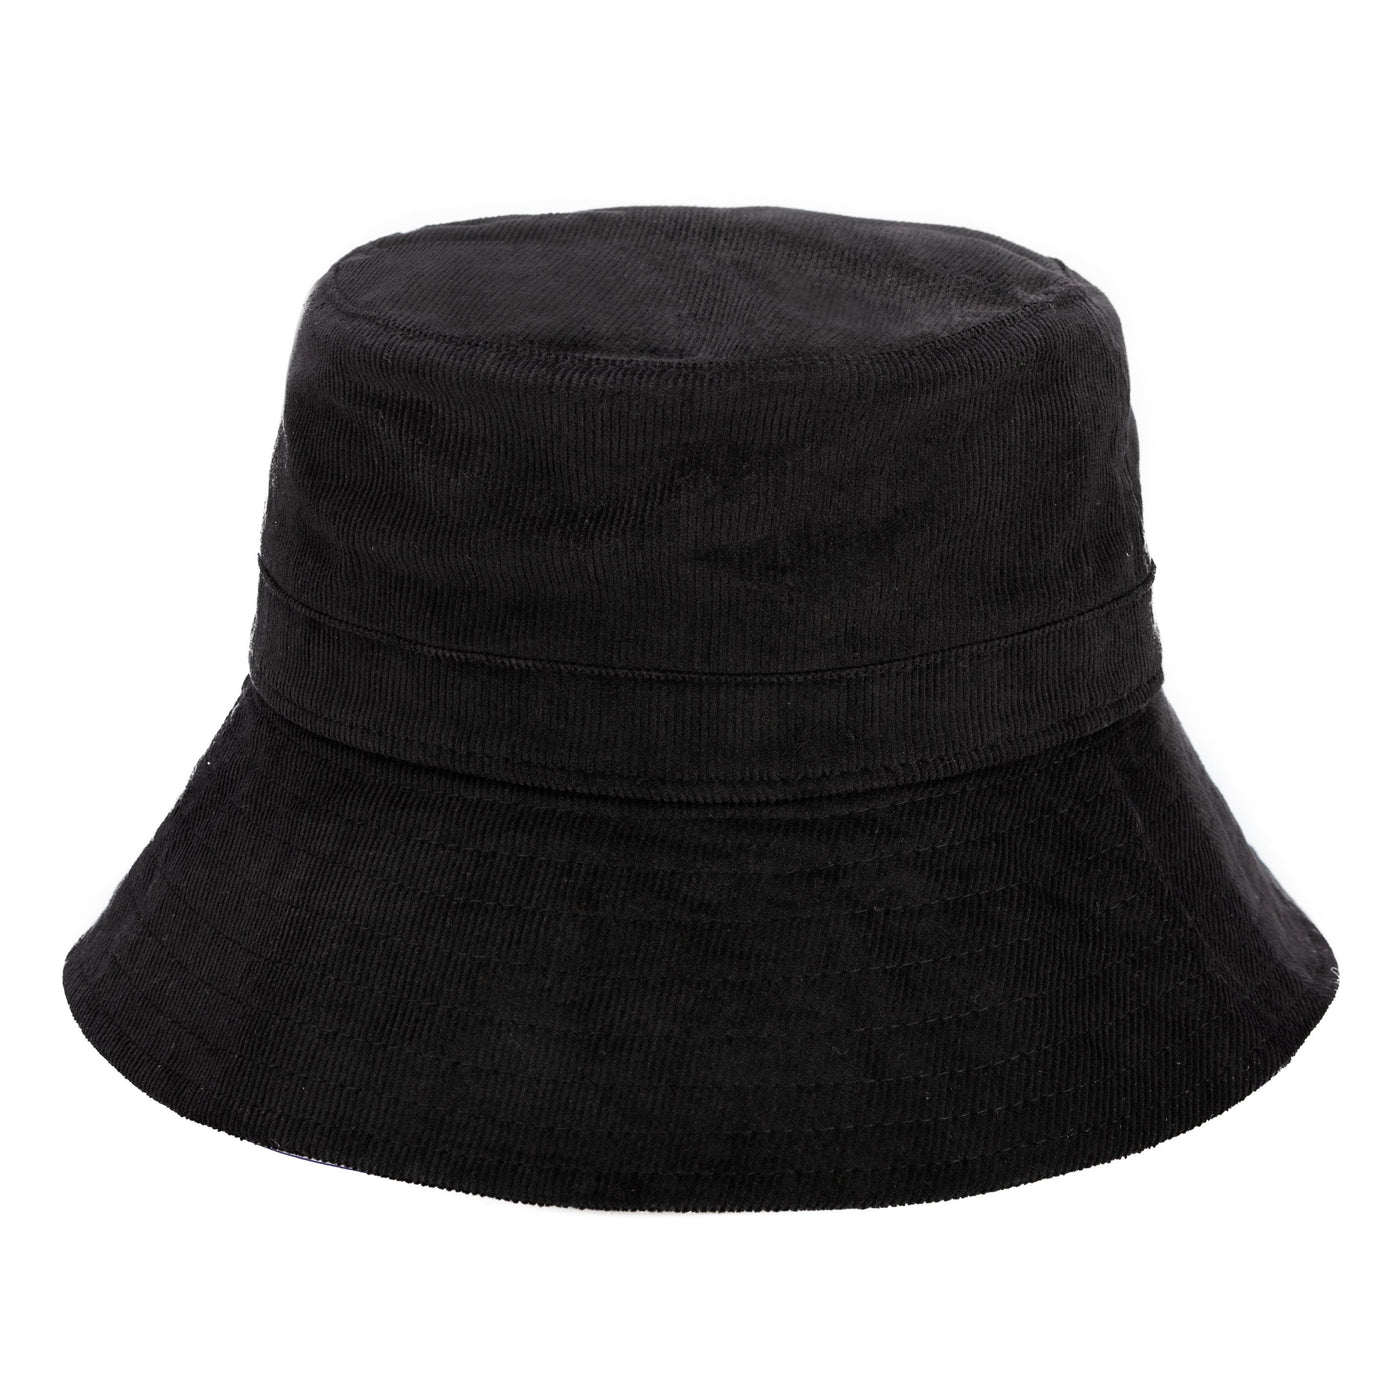 The Main Street Bucket – San Diego Hat Company